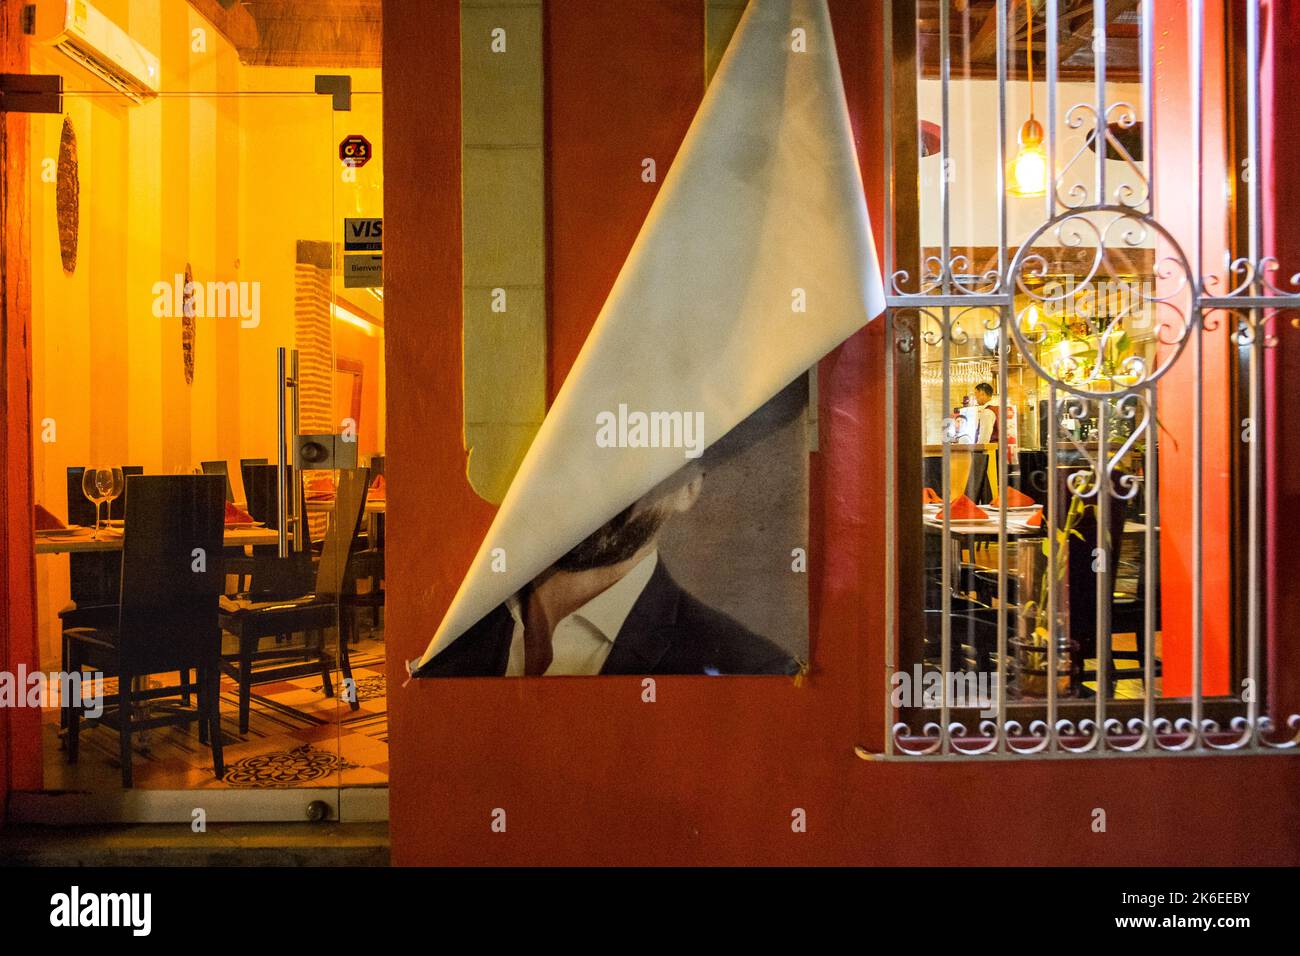 Outdoor-Poster umgeklappt, Männergesicht halb sichtbar, Cartagena, Kolumbien Stockfoto